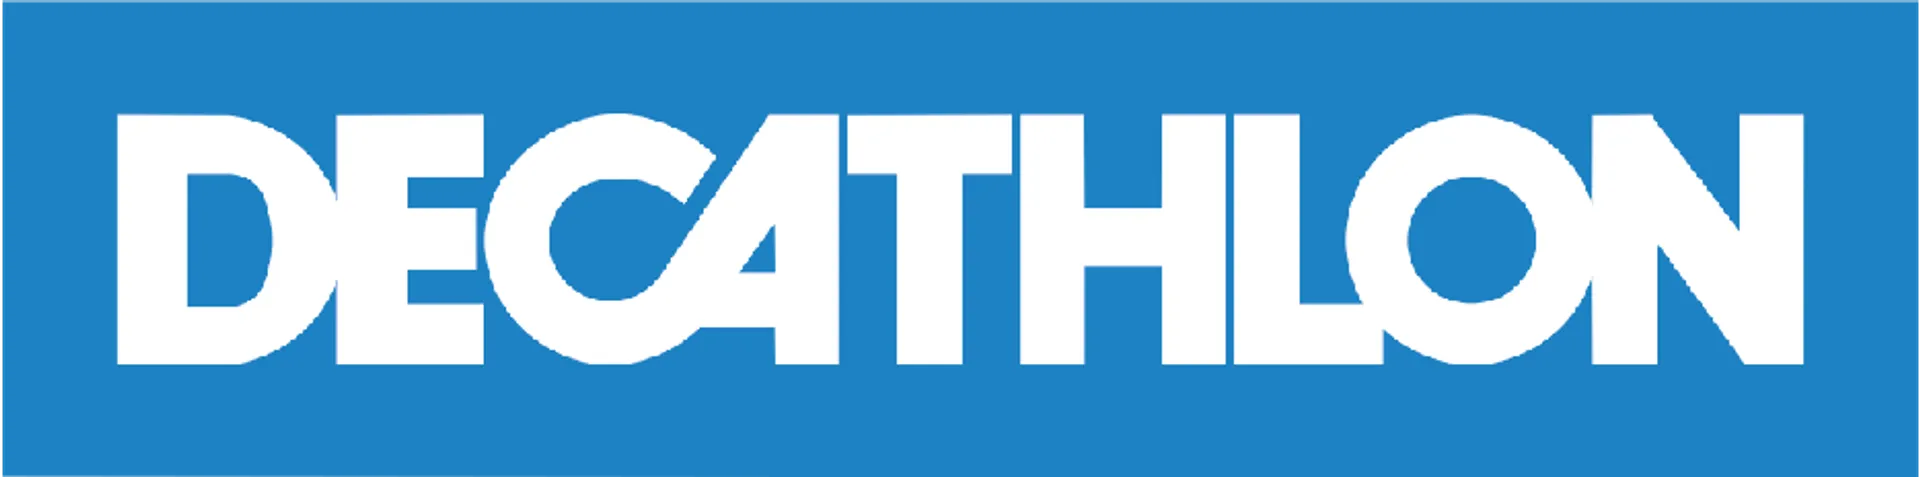 DECATHLON logo. Current catalogue